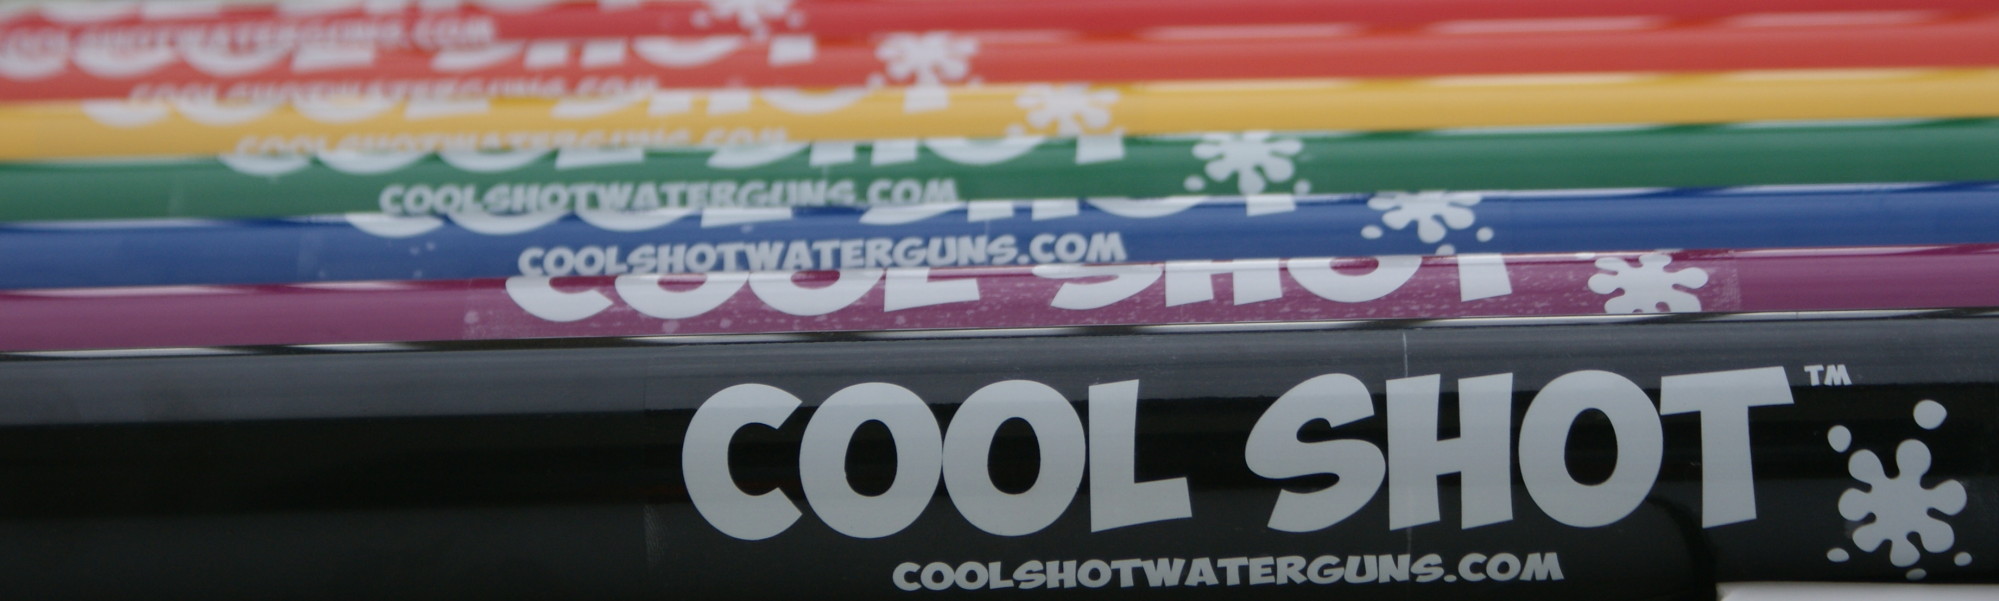 Cool Shot Water Guns